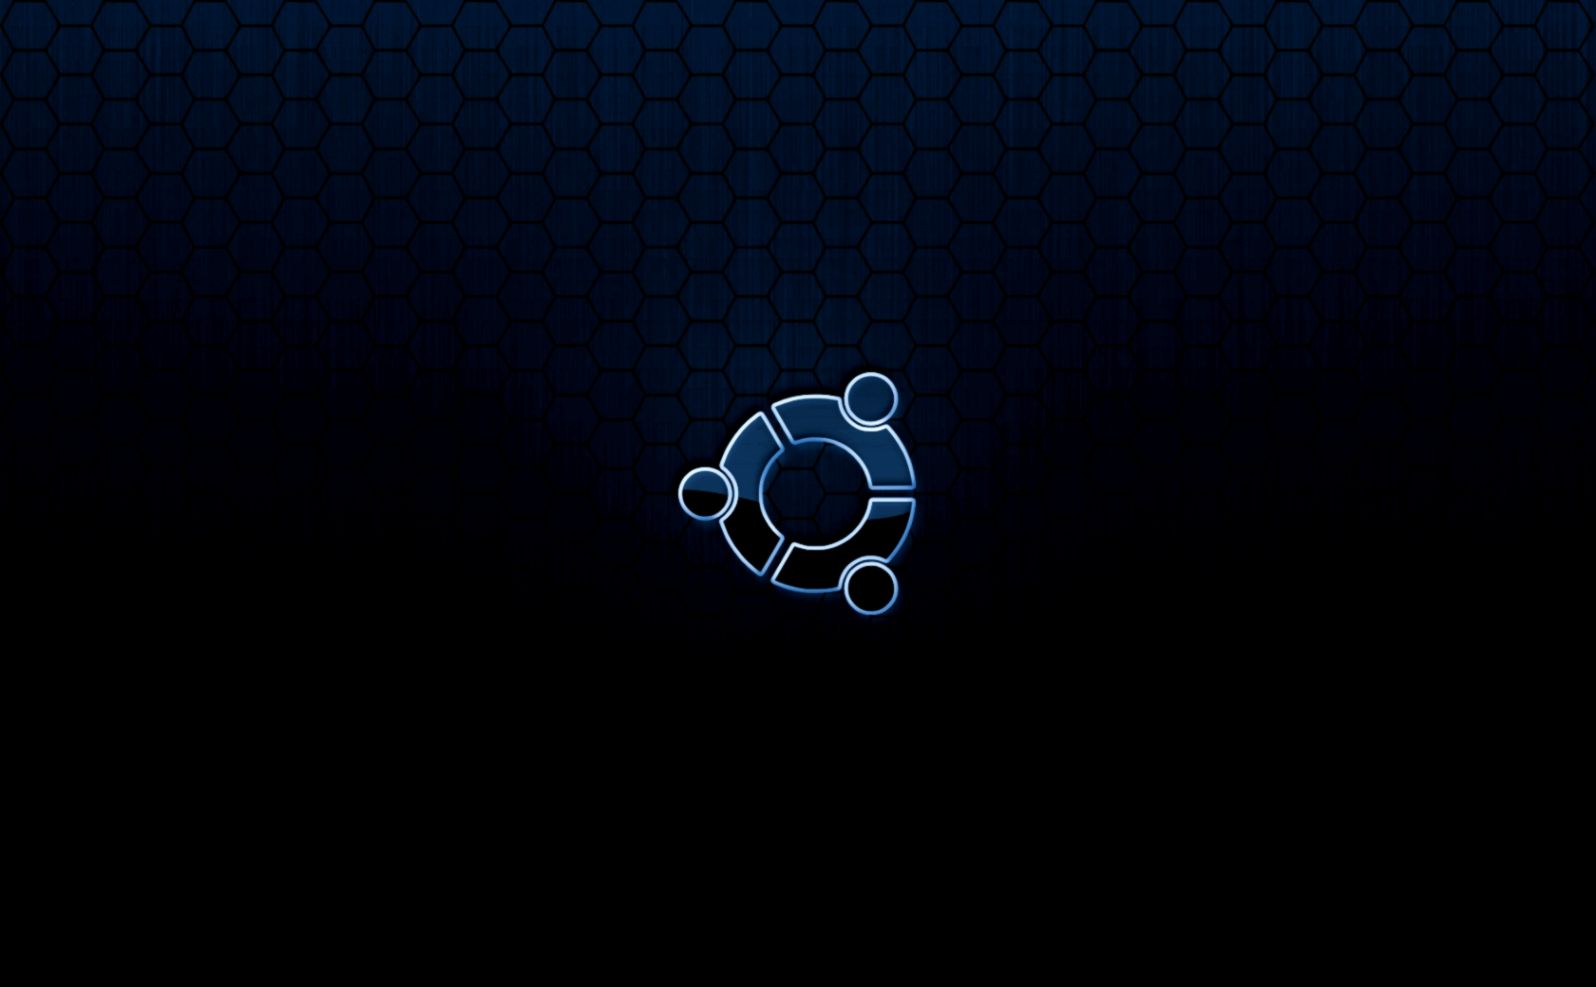 Ubuntu Wallpaper Art Blue | Best Image Background